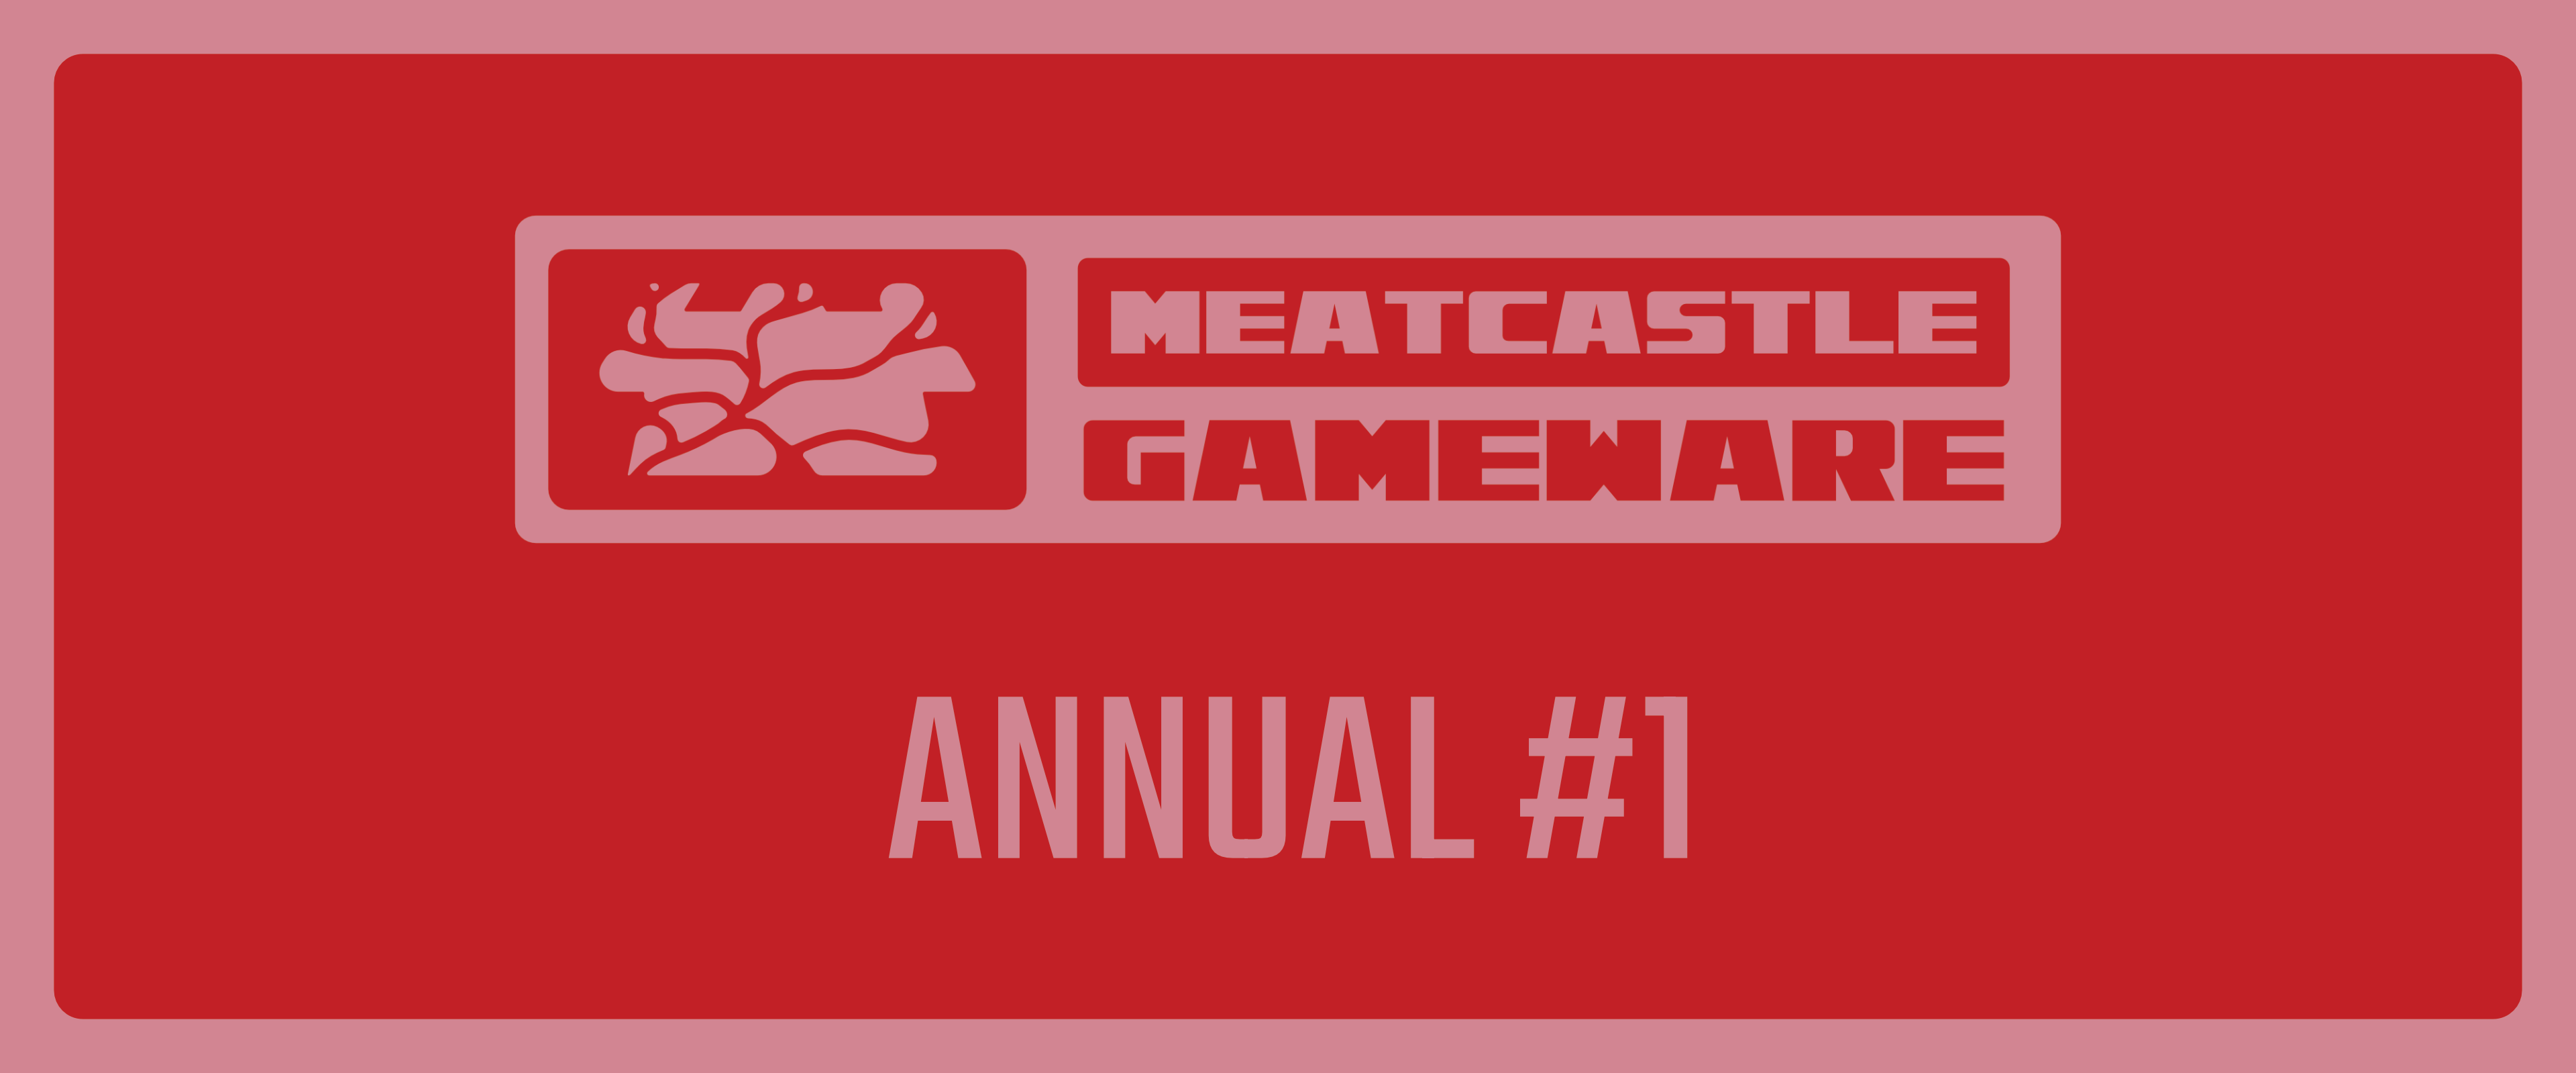 MeatCastle GameWare Annual #1